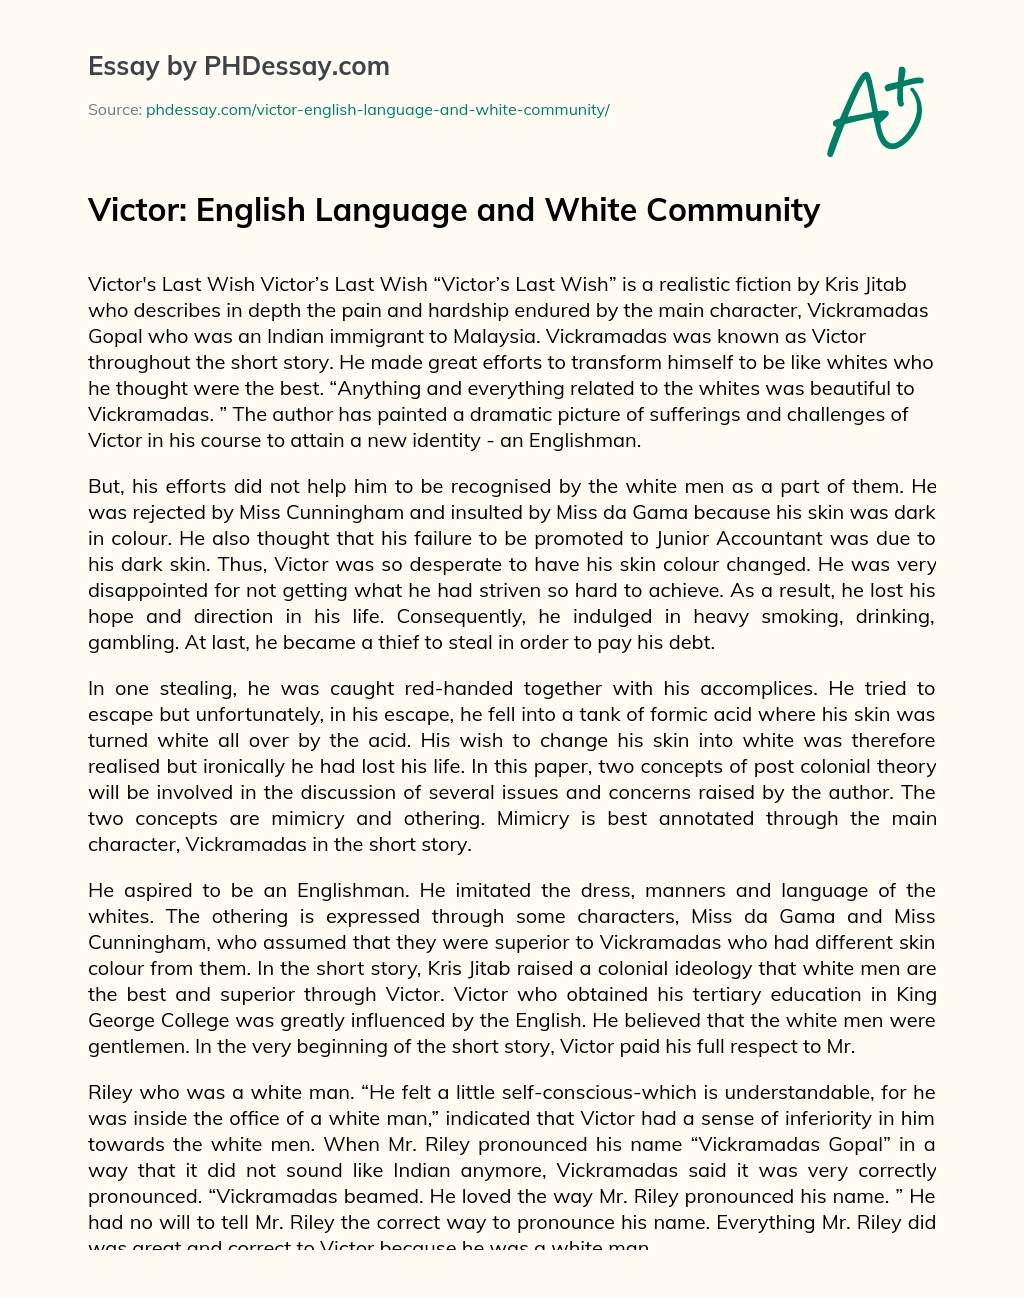 Victor: English Language and White Community essay